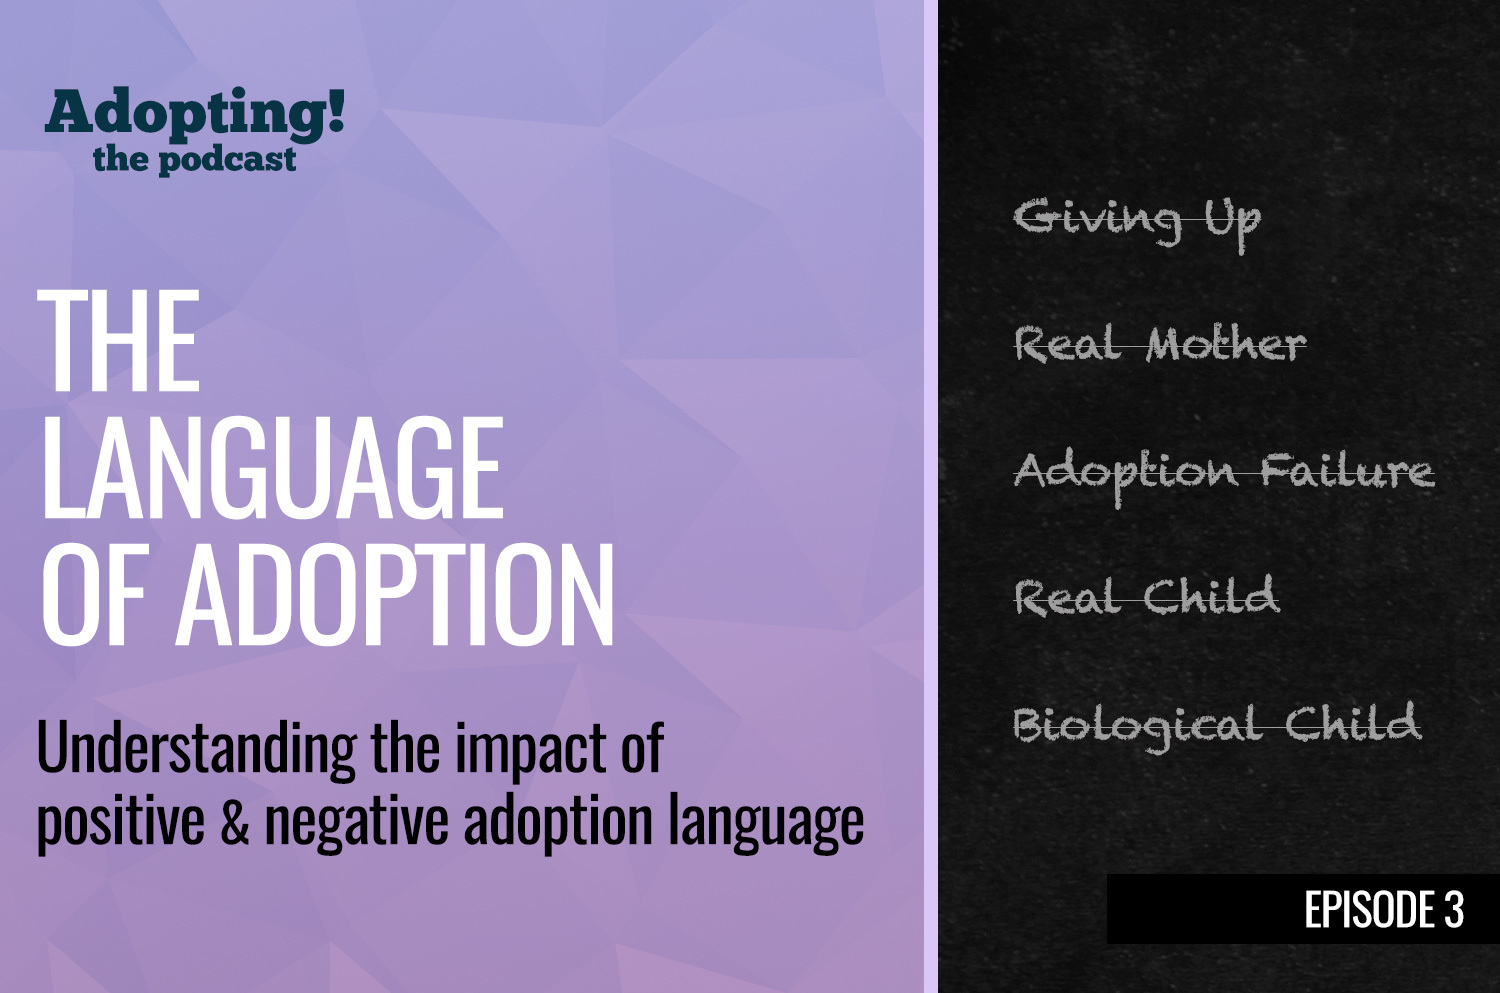 Positive adoption language